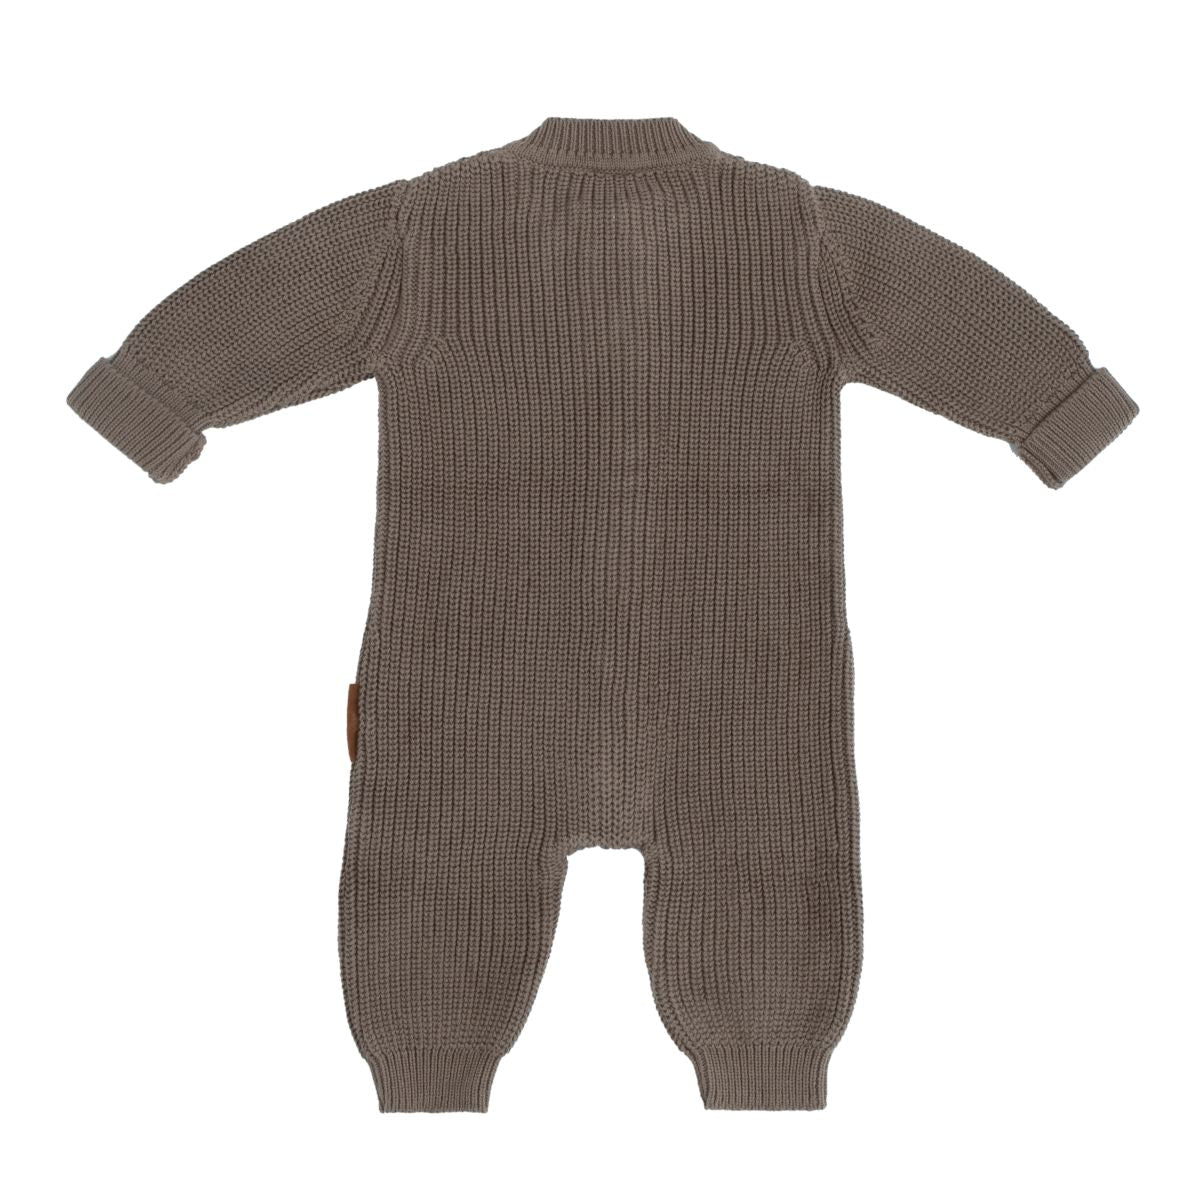 Baby-s-only-BO-342-314-039-strampler-bio-baumwolle-pyjama-anzug-fair